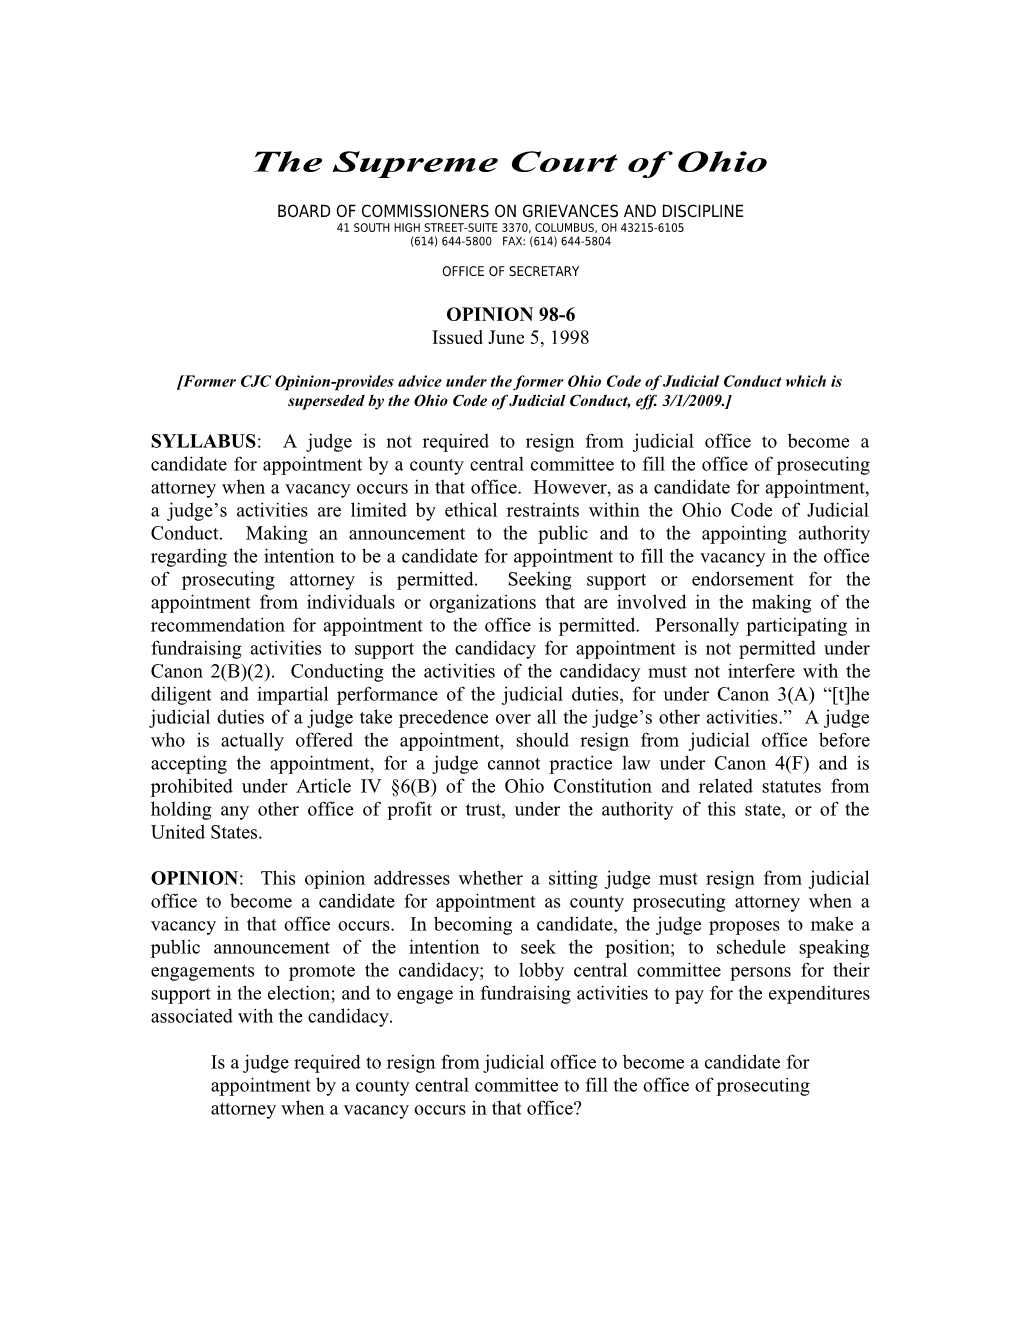 The Supreme Court of Ohio s20